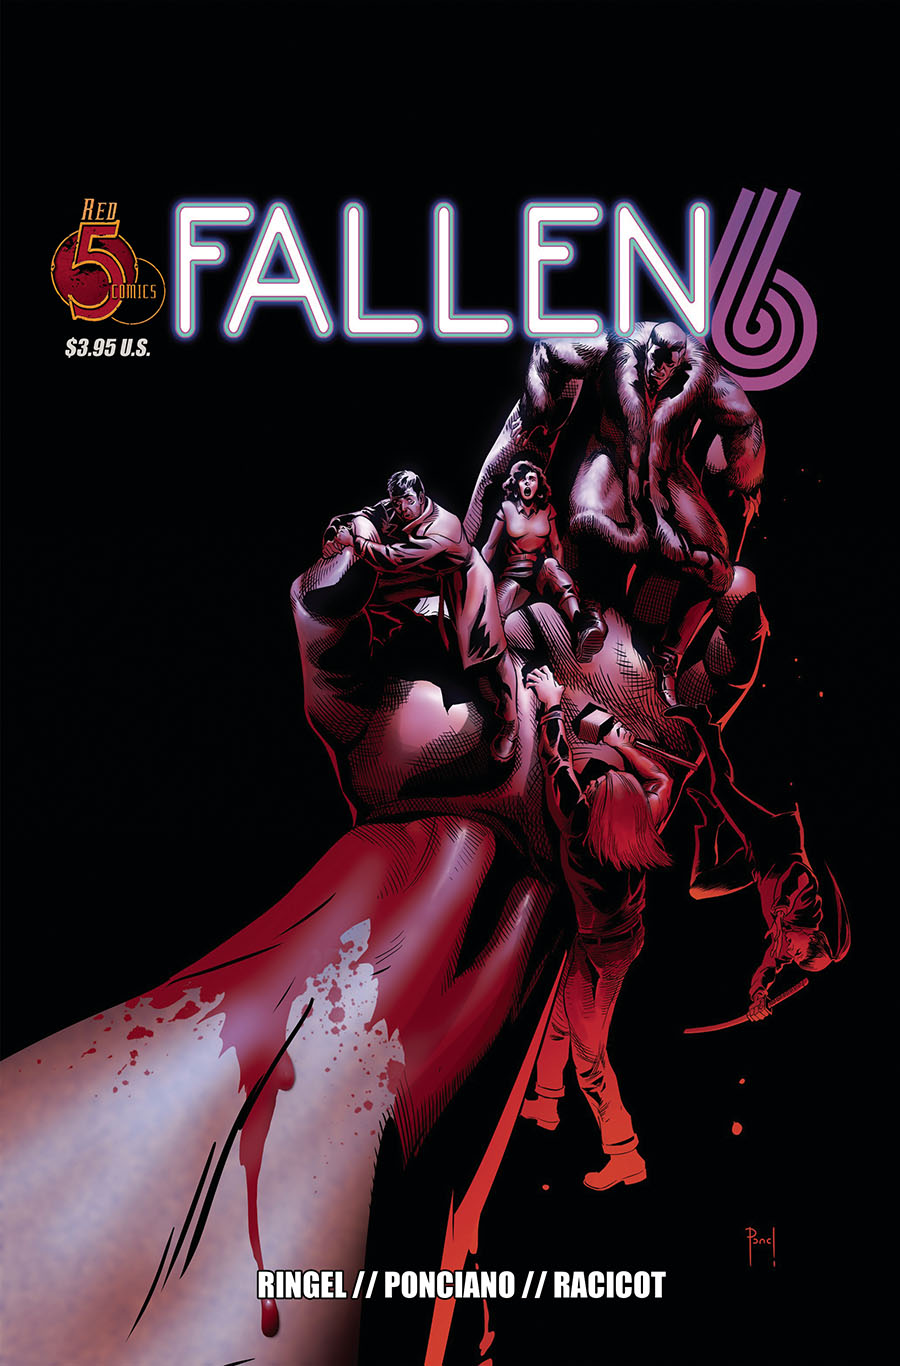 Fallen (Red 5 Comics) #6